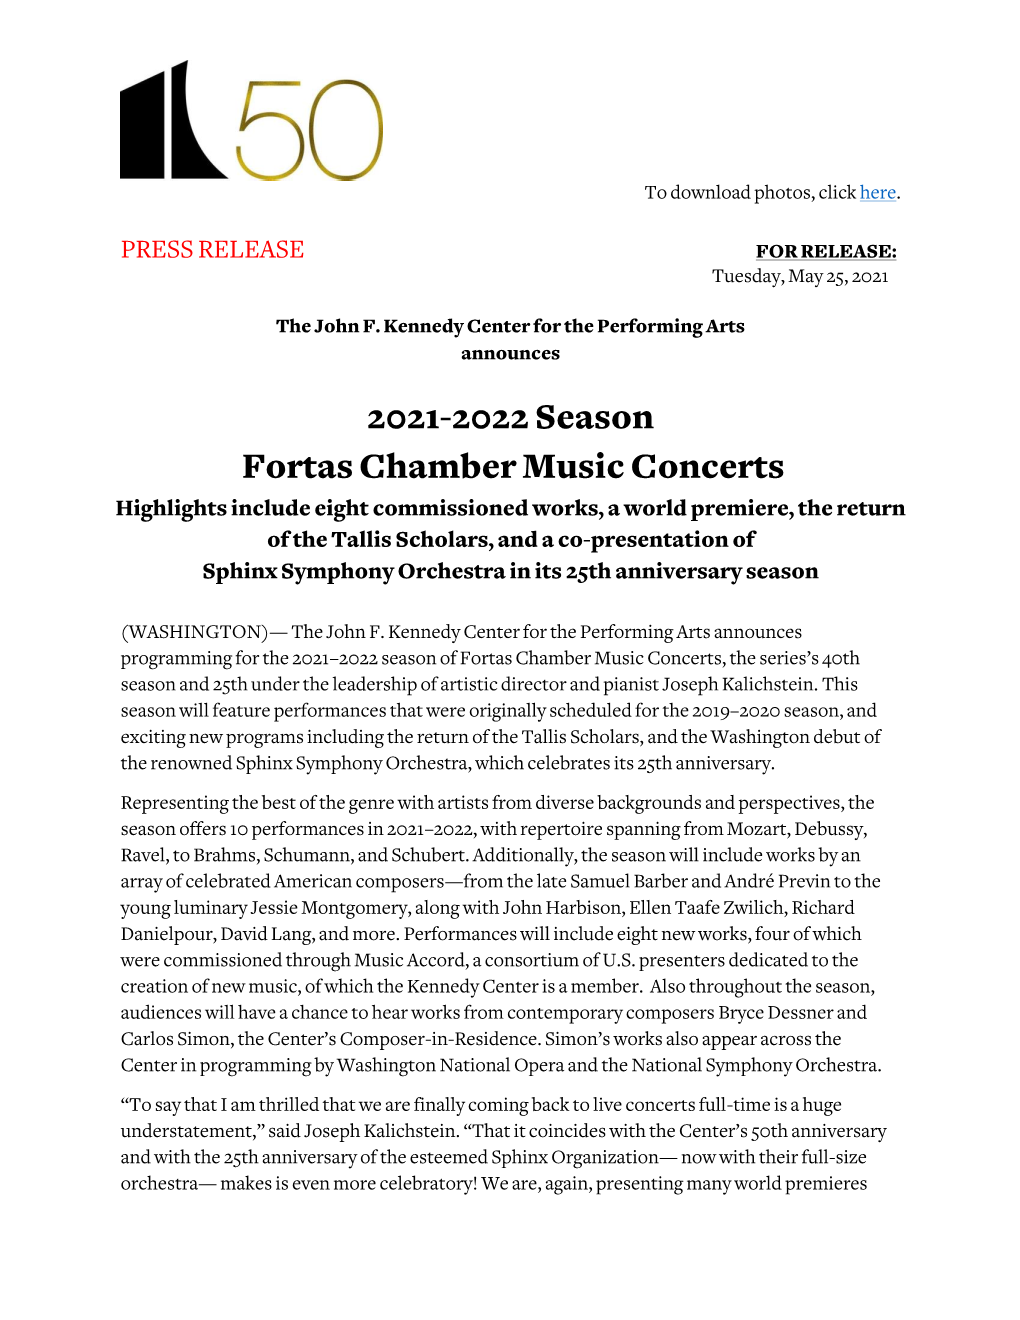 2021-2022 Season Fortas Chamber Music Concerts